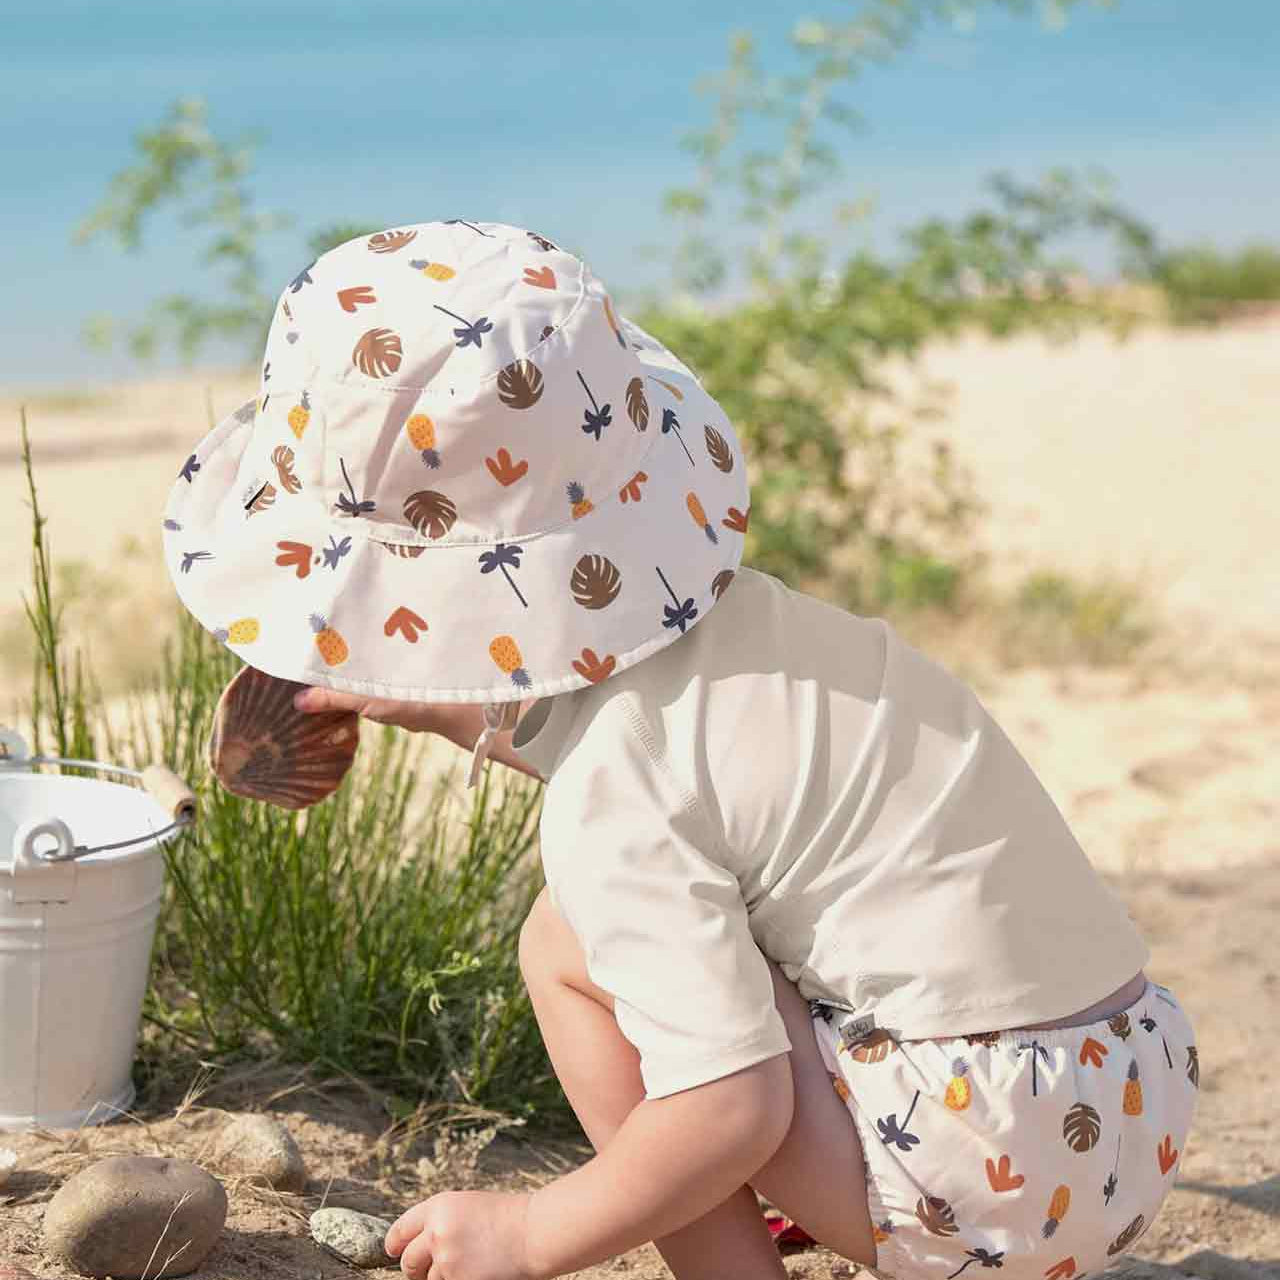 Fralda de banho reutilizável menino - Botanical 3-6meses | LASSIG Mini-Me - Baby & Kids Store